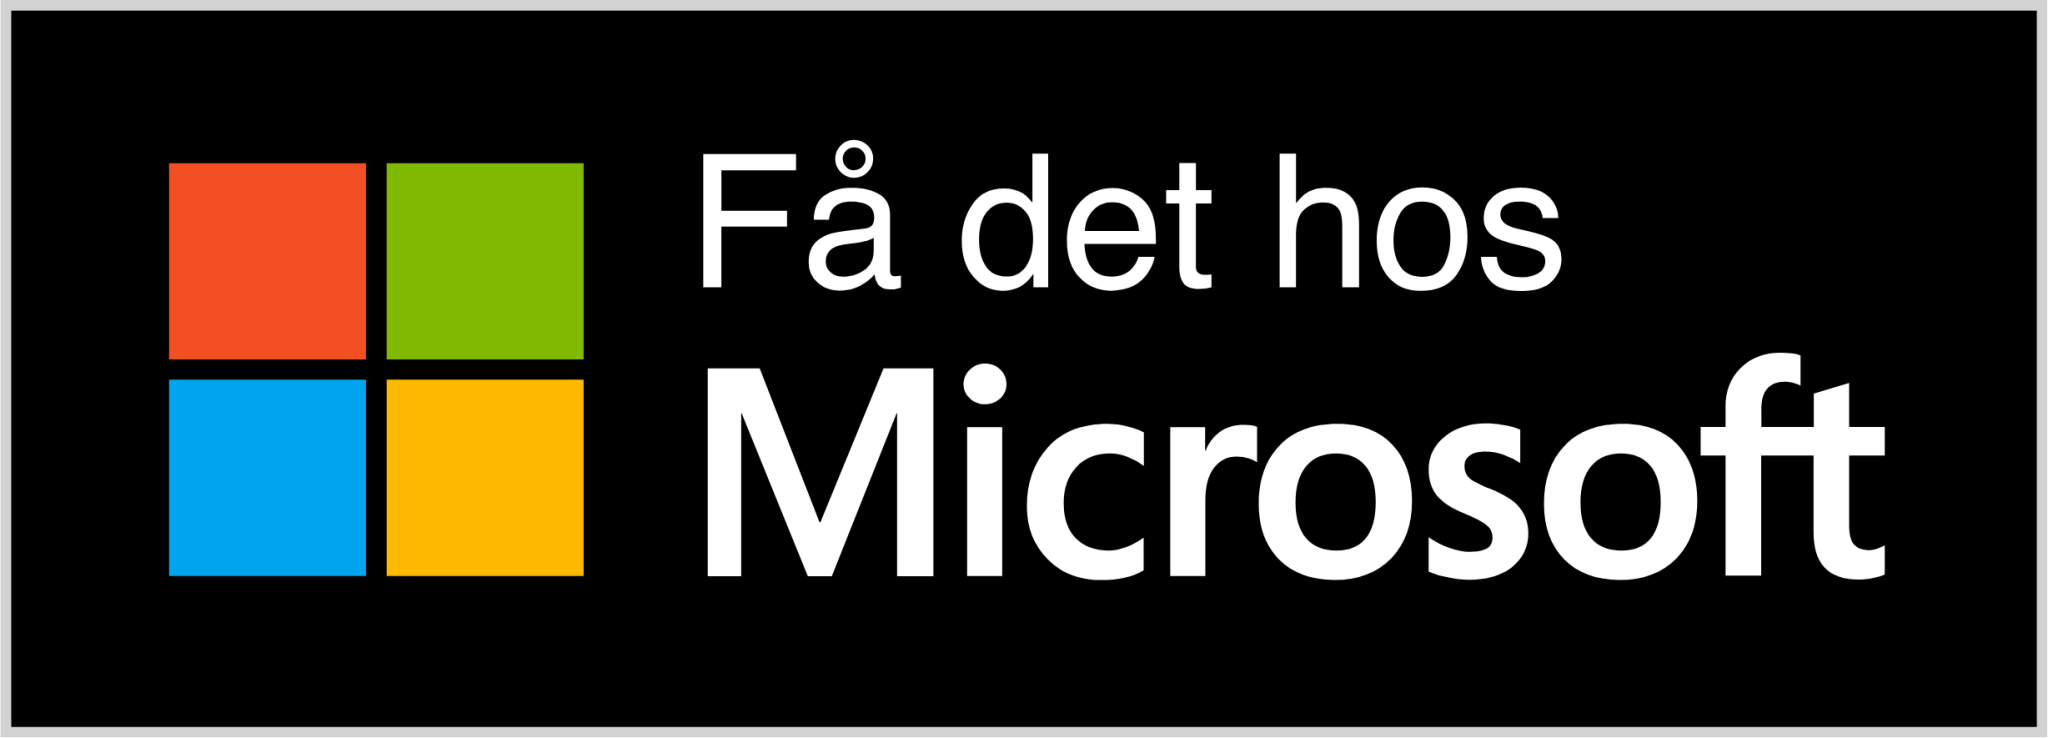 app microsoft dk icon